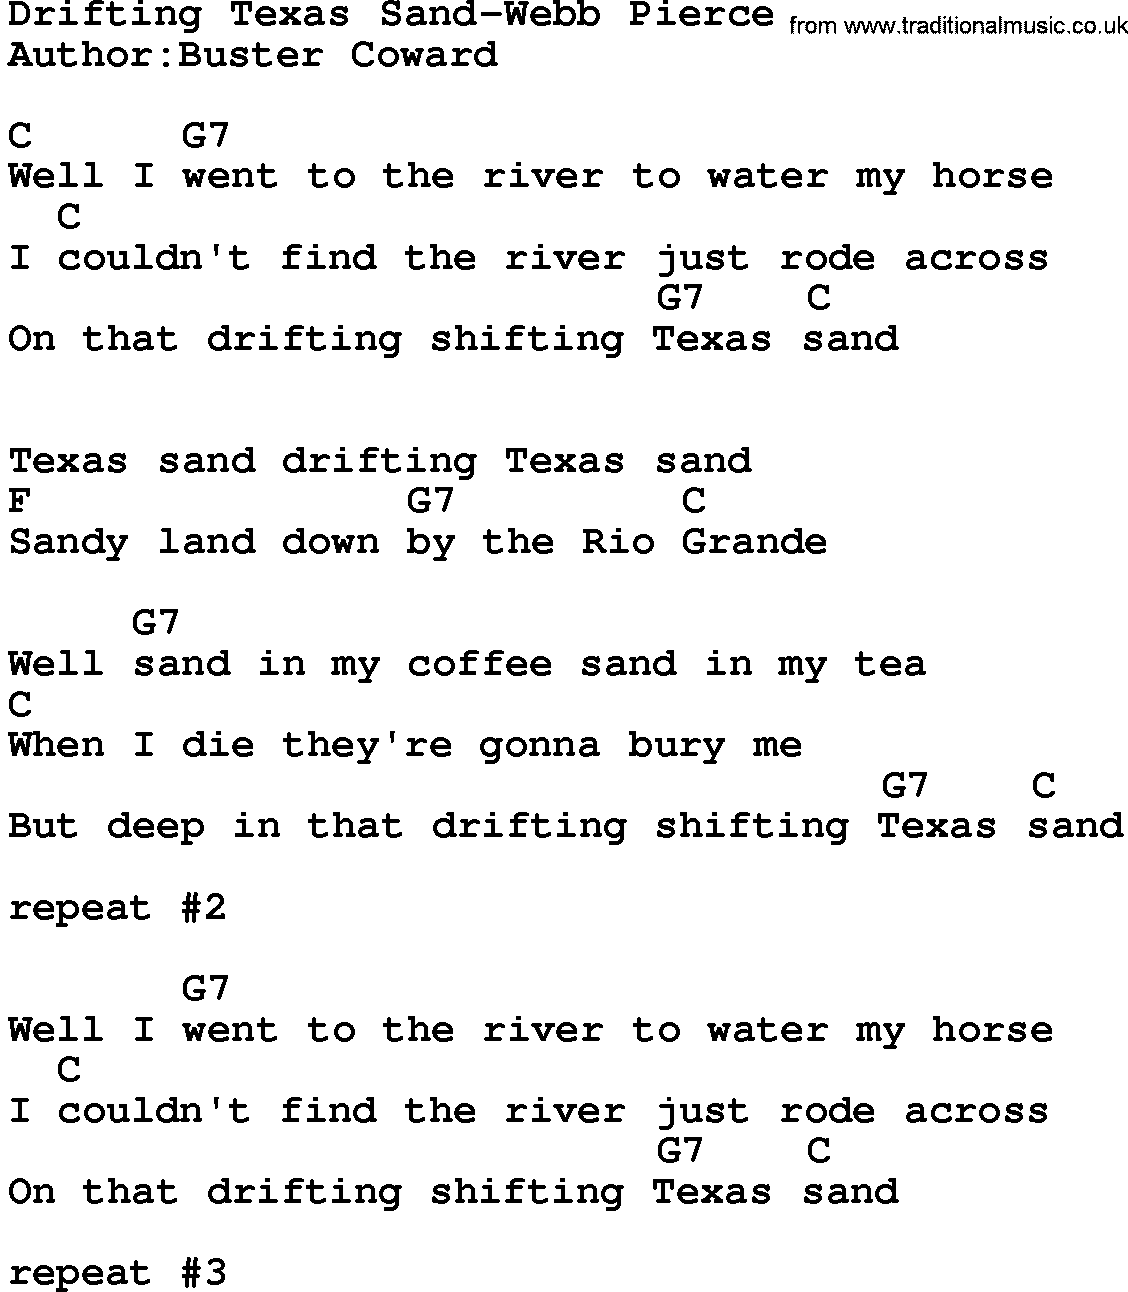 Country music song: Drifting Texas Sand-Webb Pierce lyrics and chords